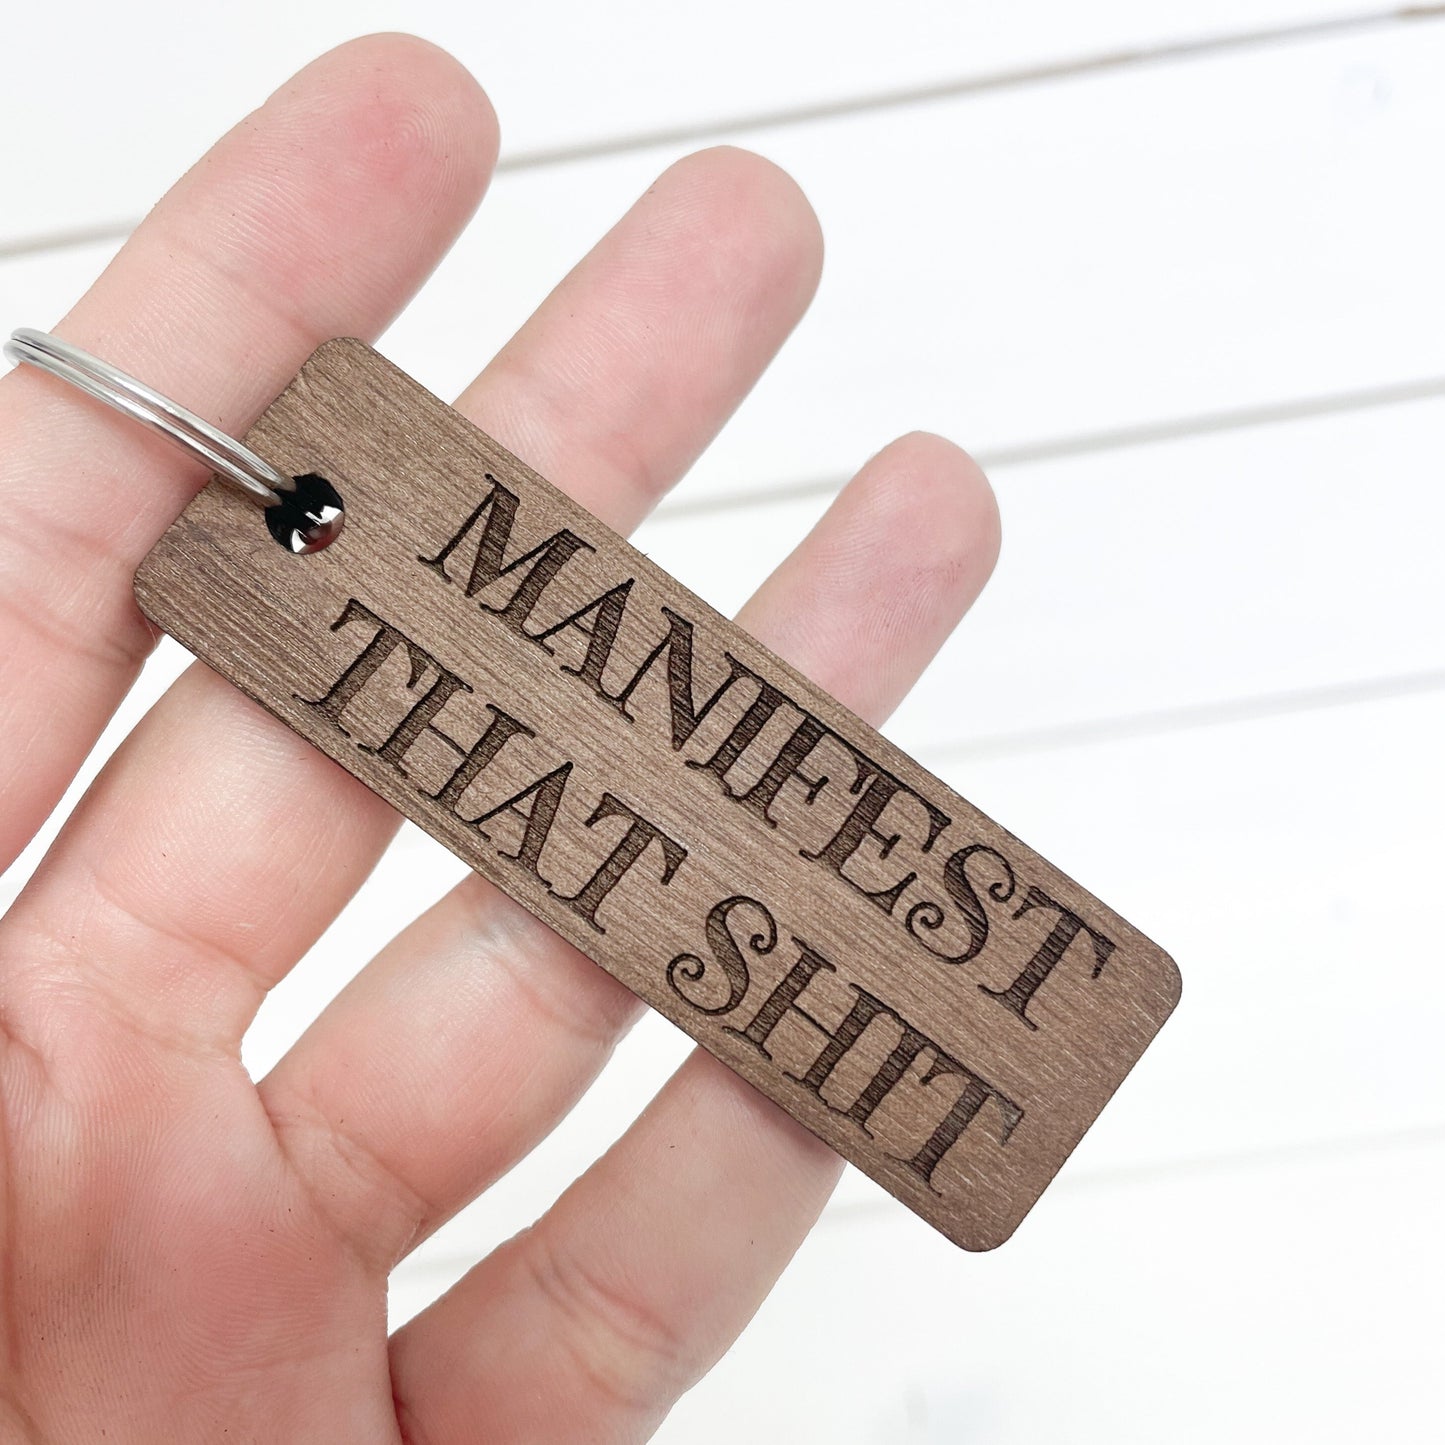 Manifest that Sh!t walnut keychain.